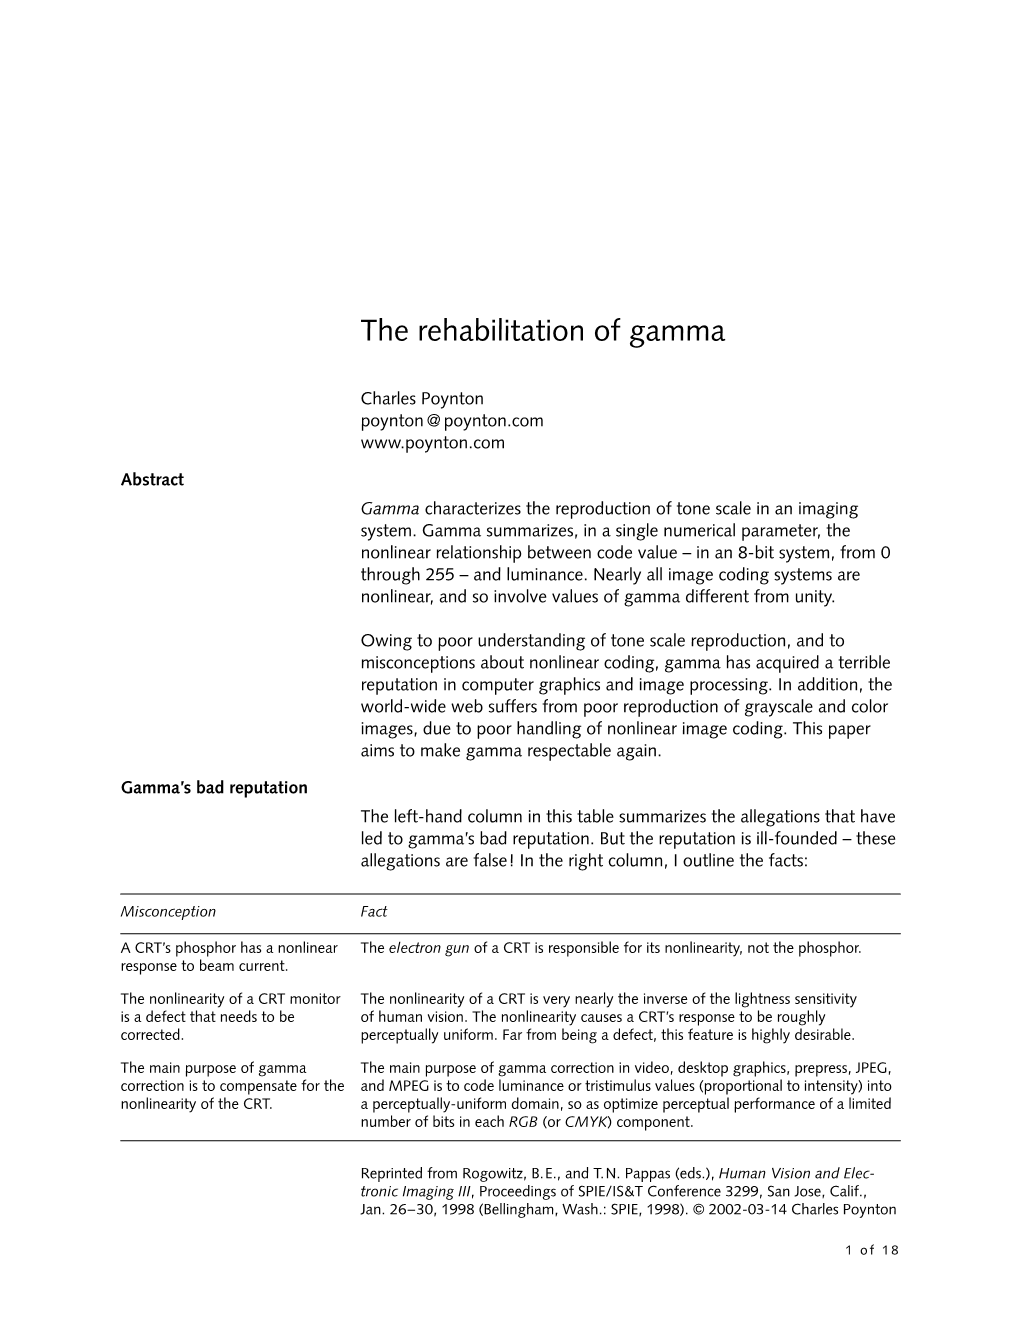 The Rehabilitation of Gamma